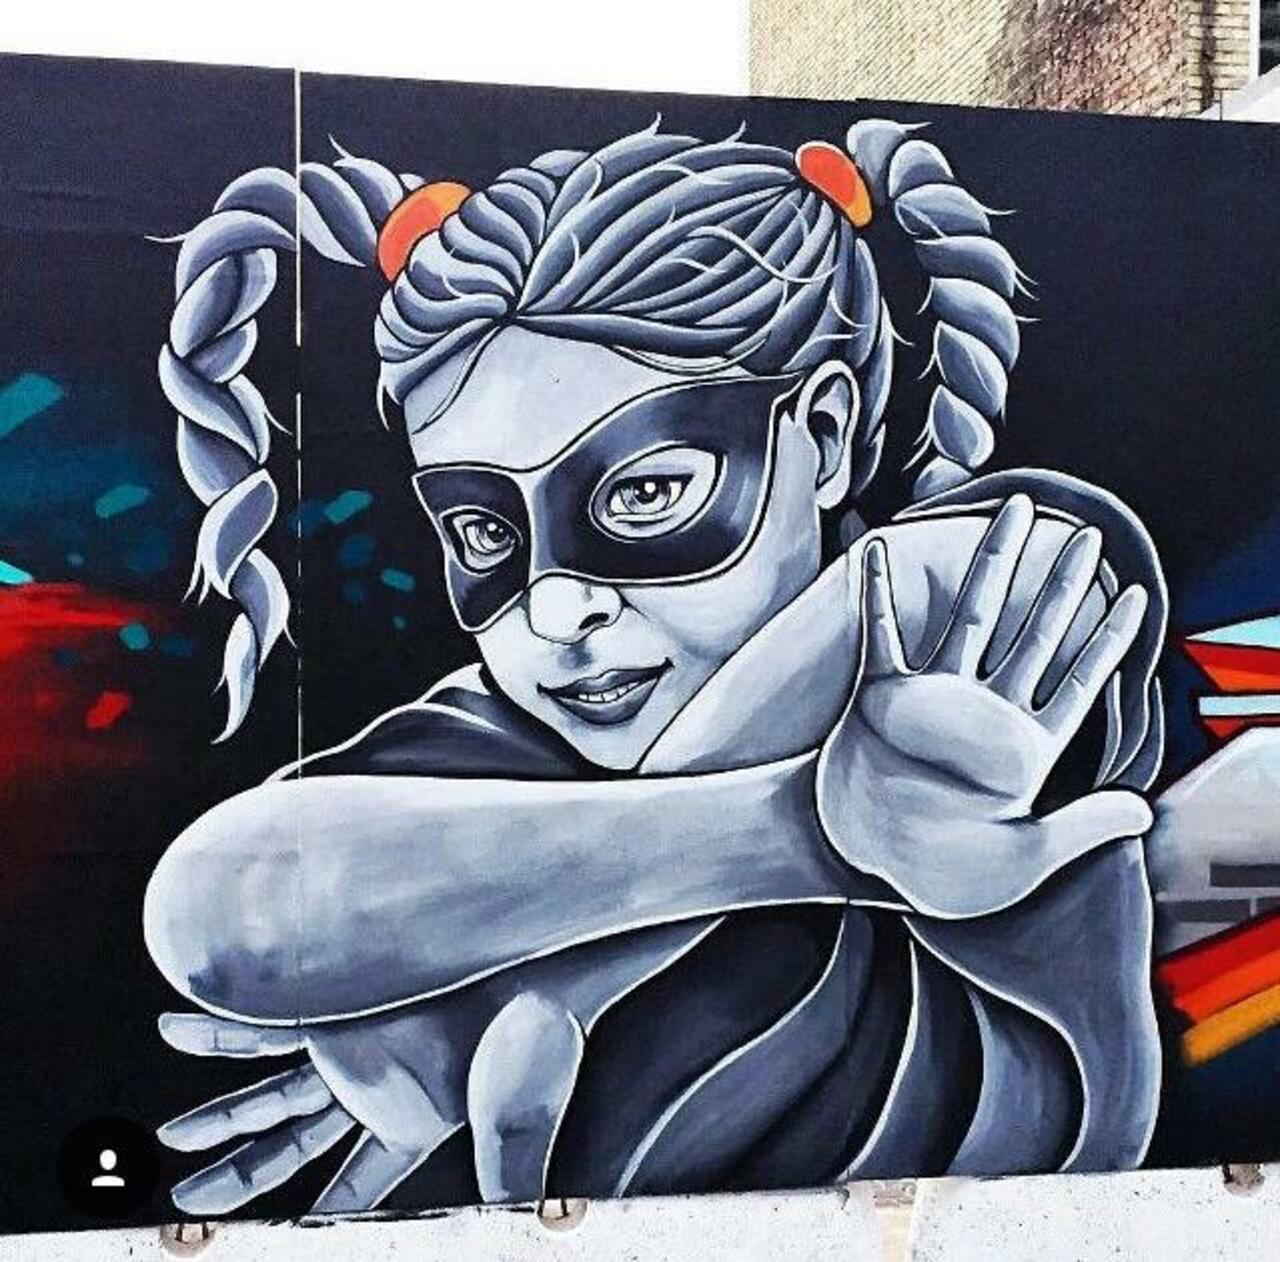 Street Art by Stinehvid 

#art #graffiti #mural #streetart http://t.co/0v0gdRa7tk